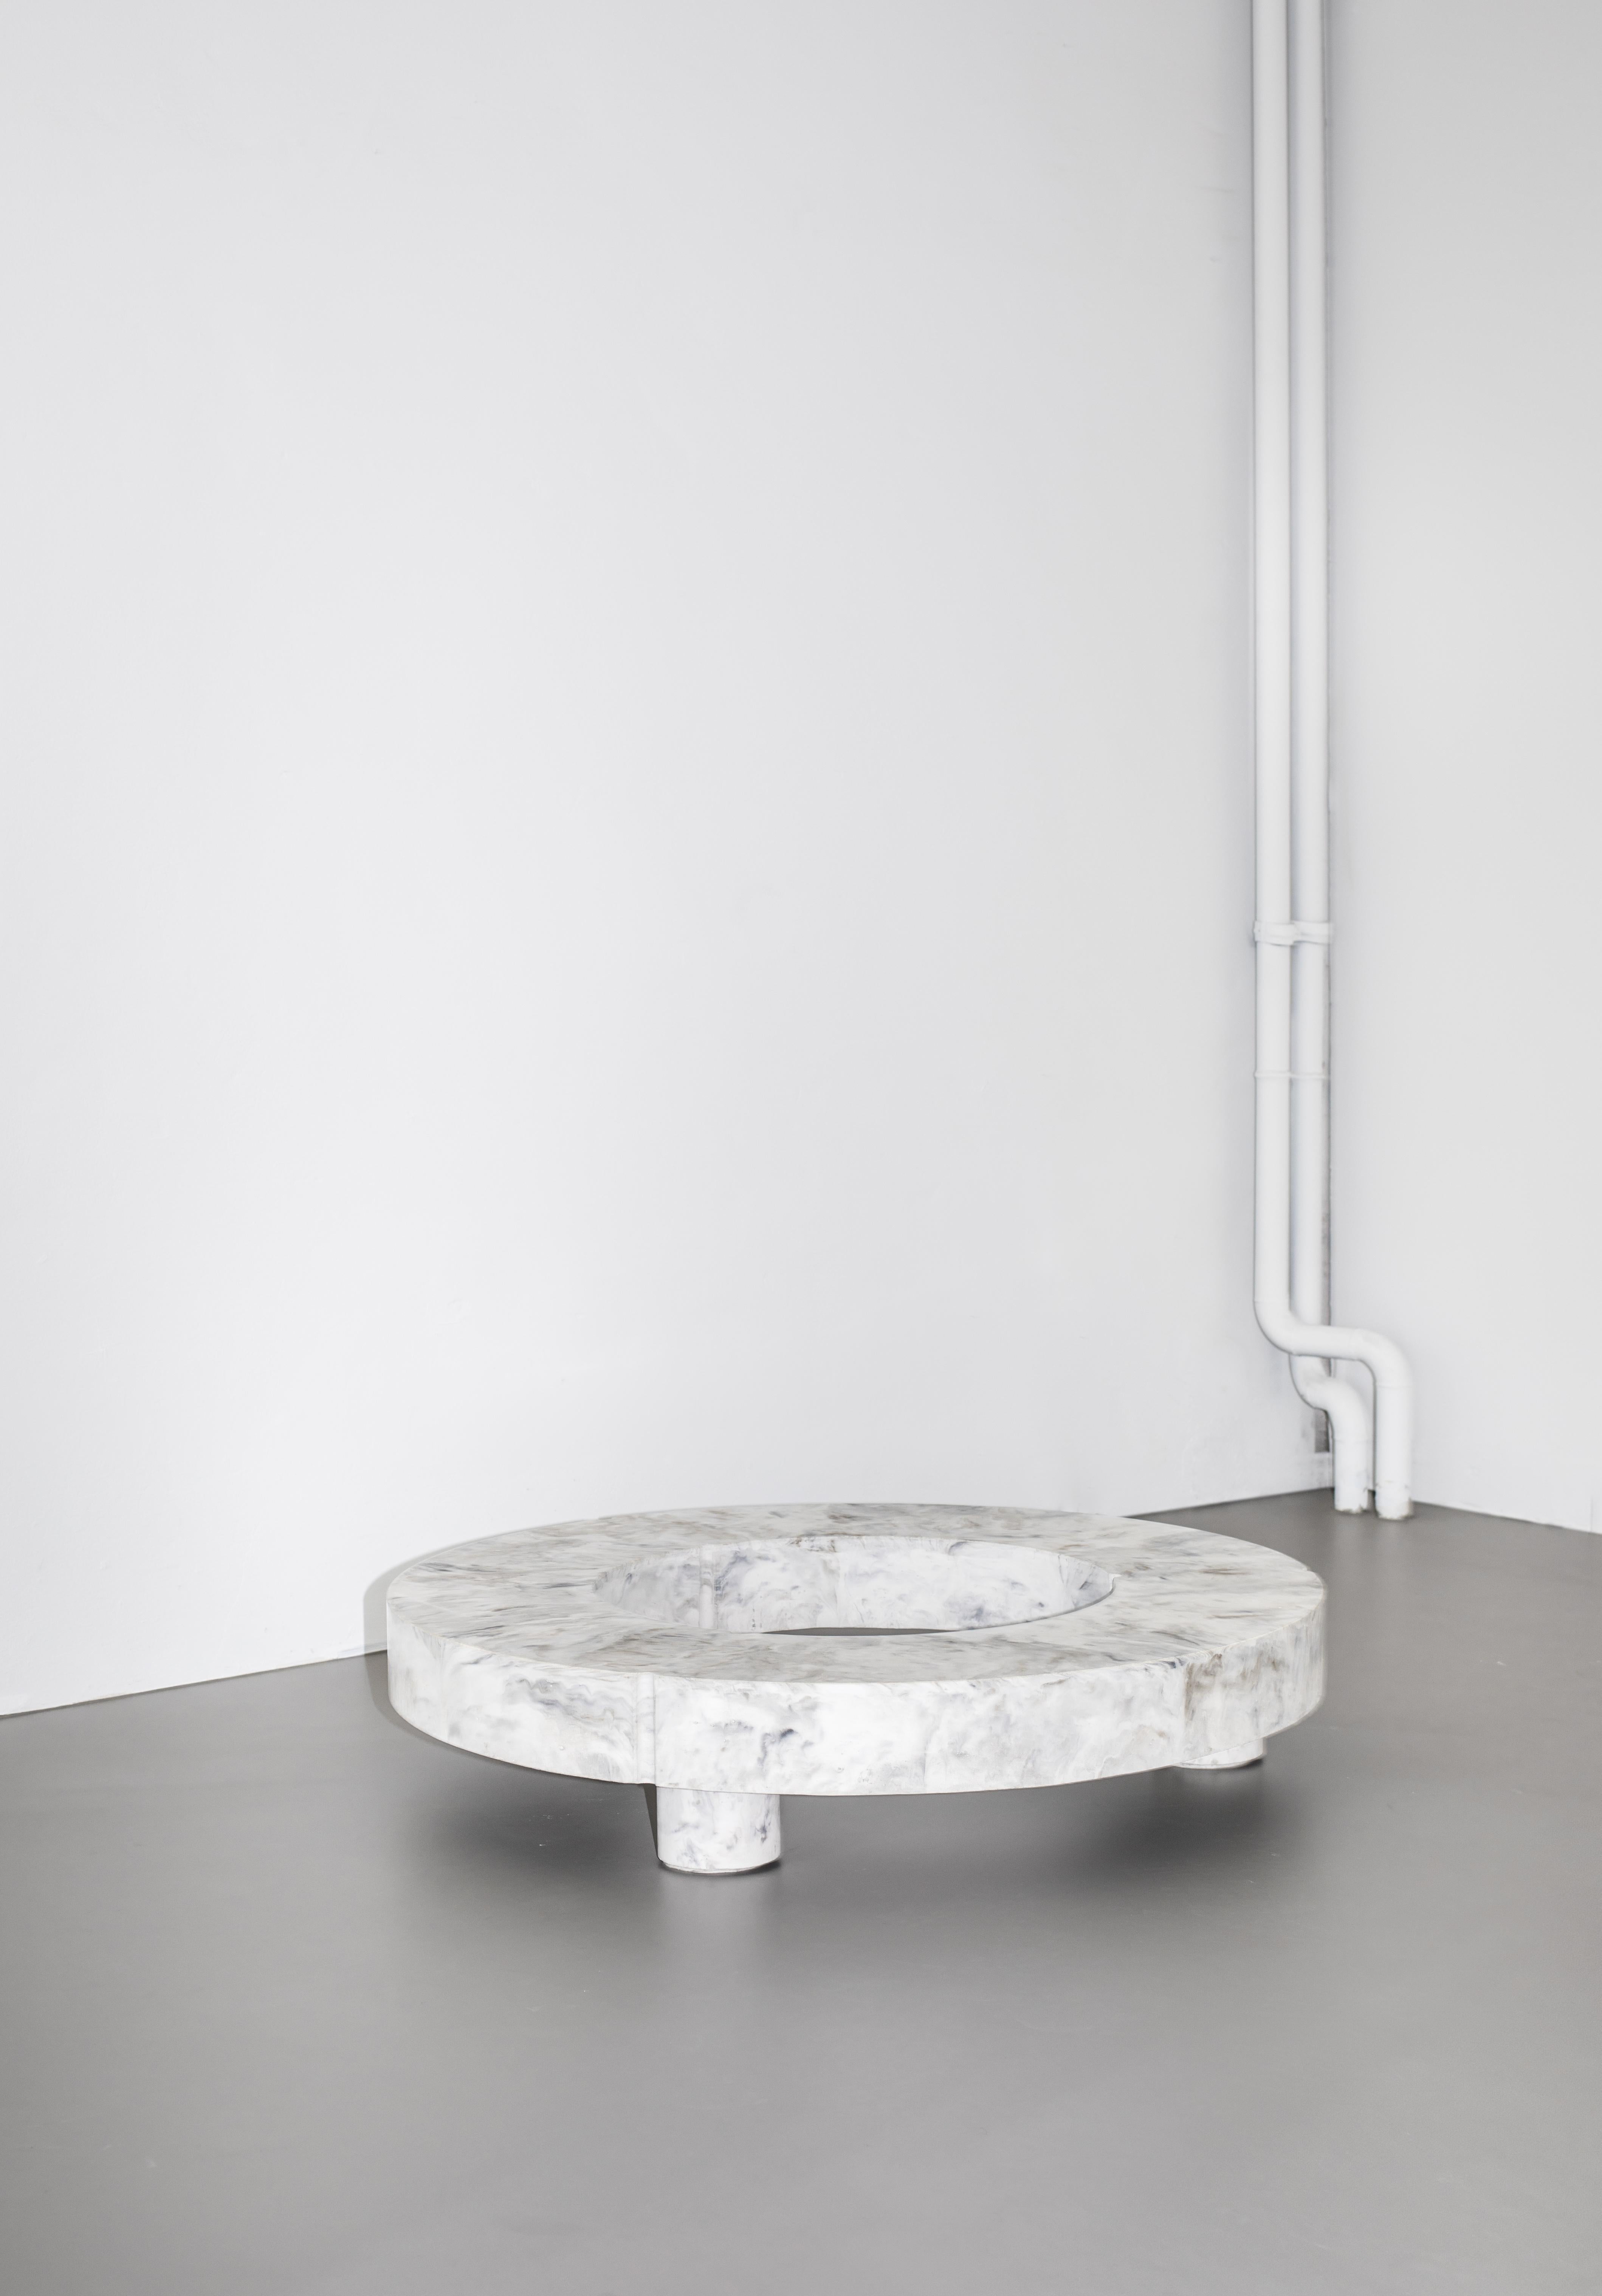 Gestalt Low Table, Signed by Frederik Bogaerts and Jochen Sablon 4